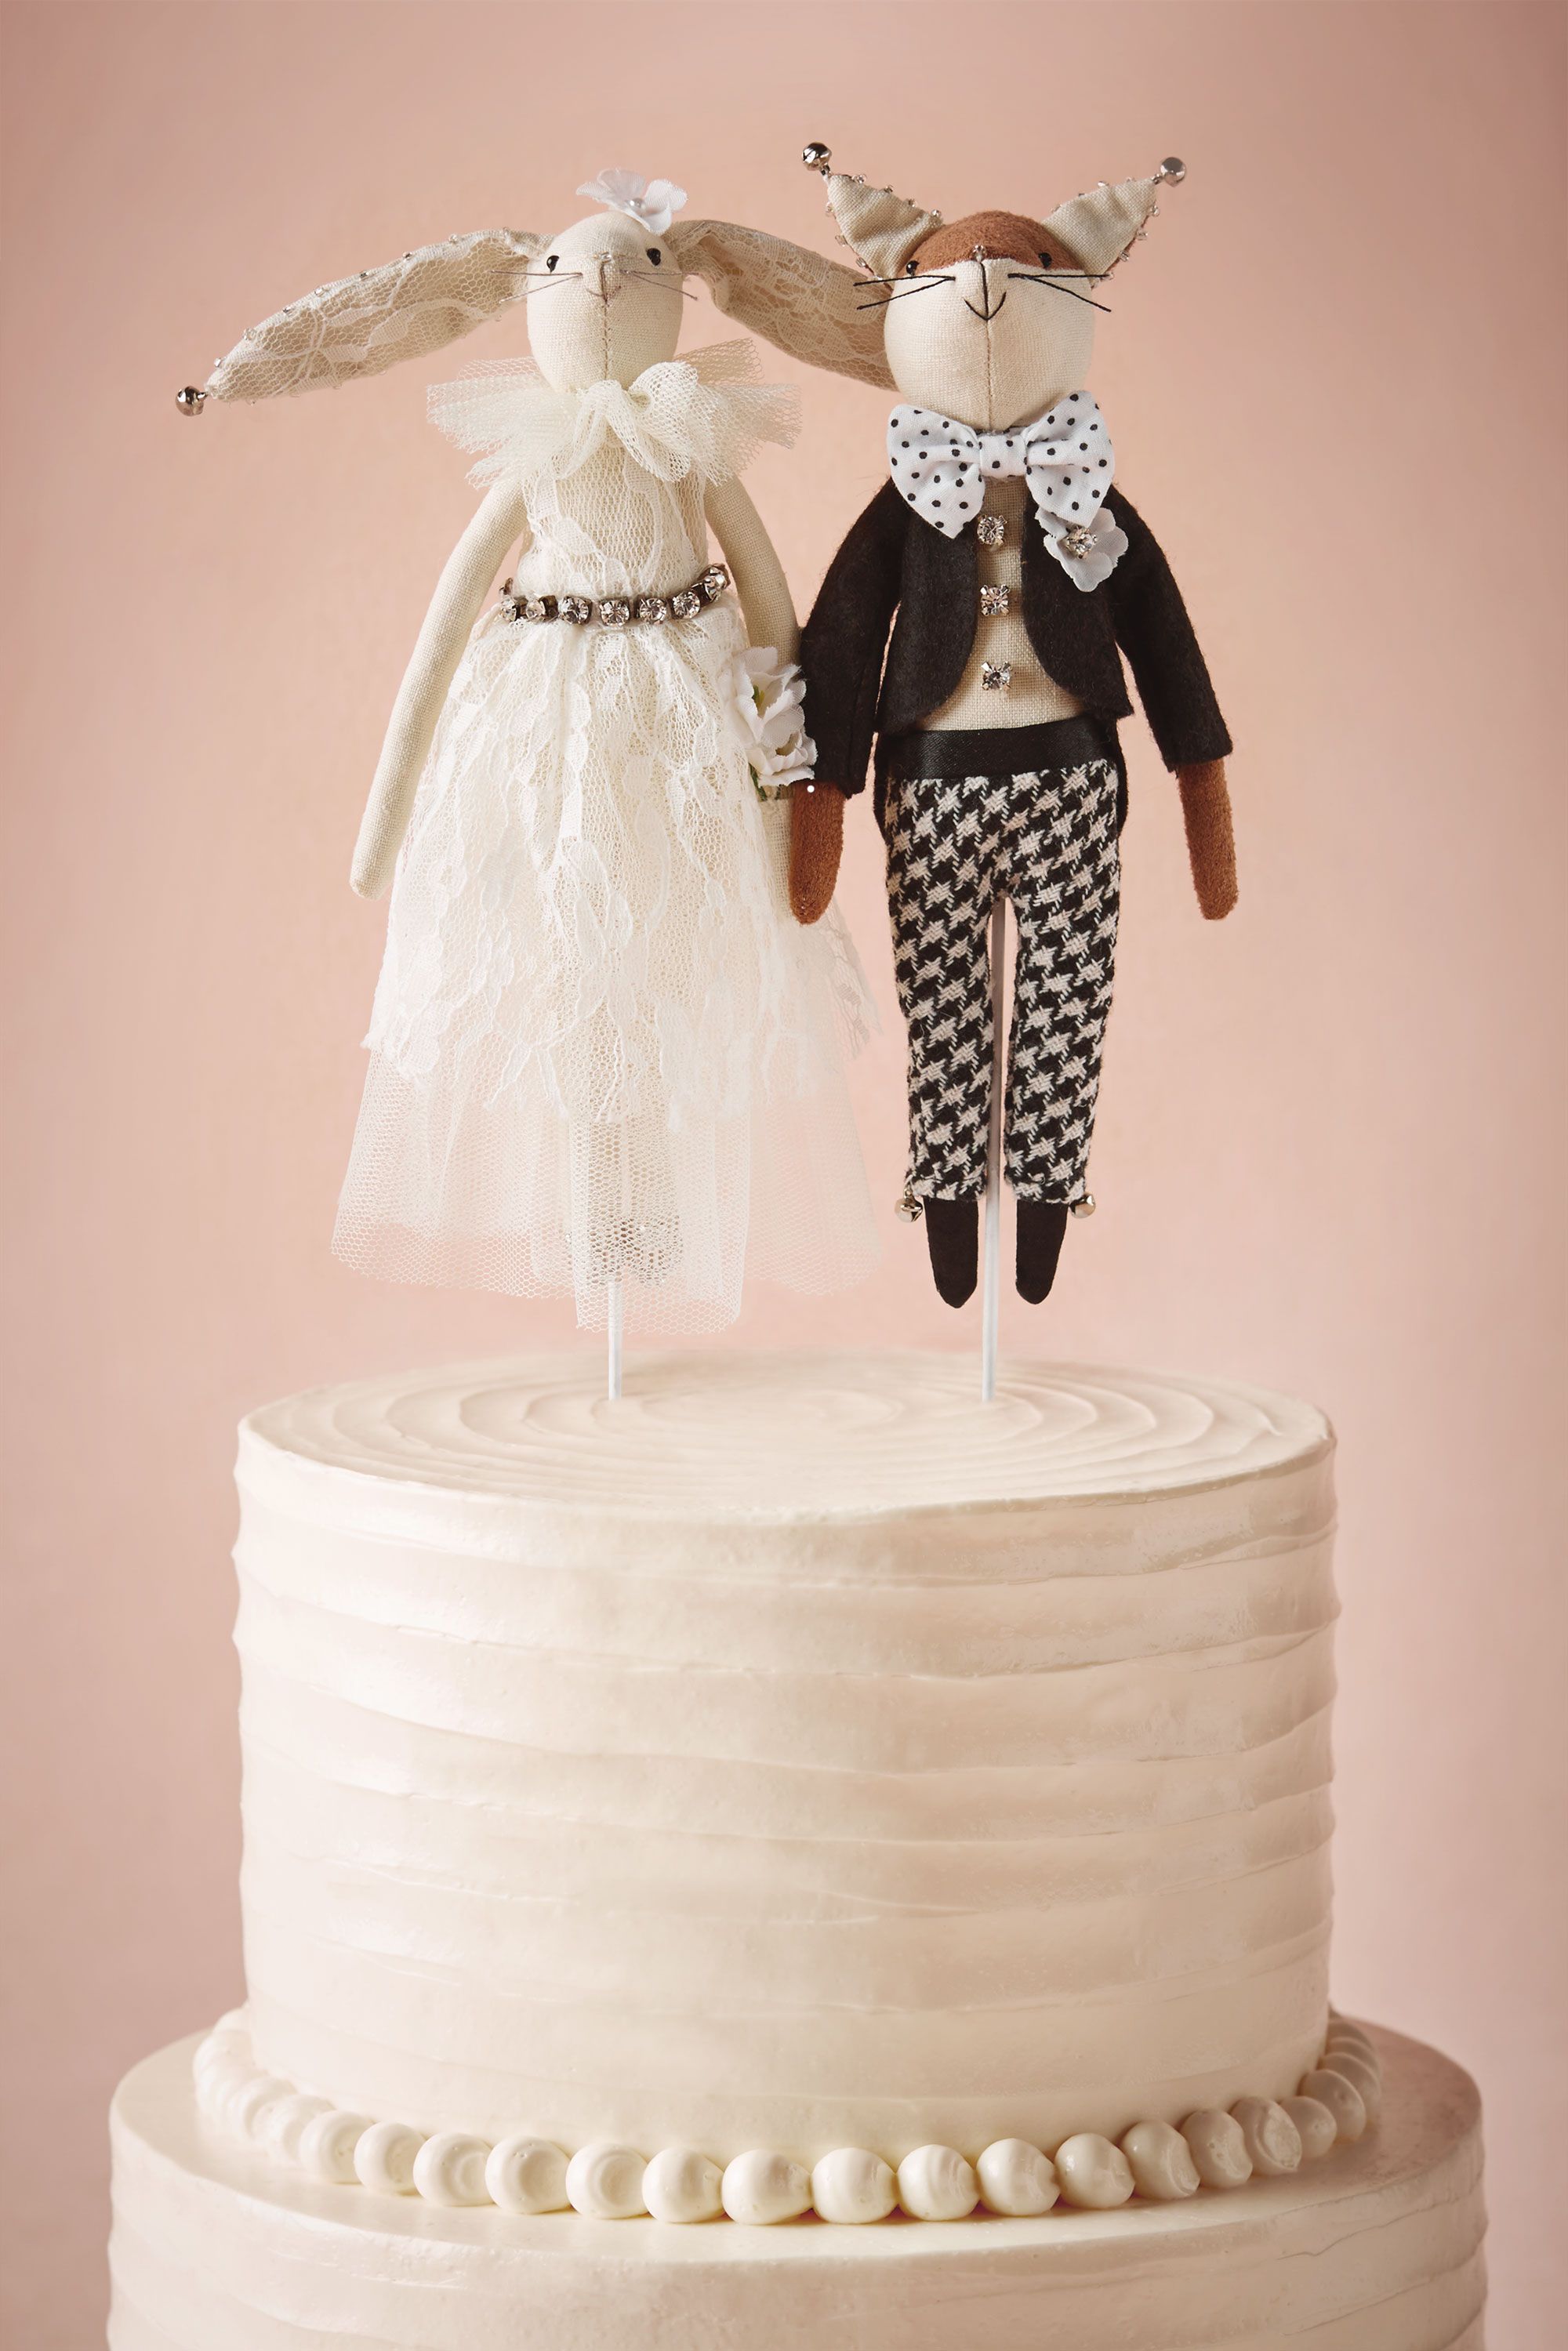 Images of wedding cake decorations